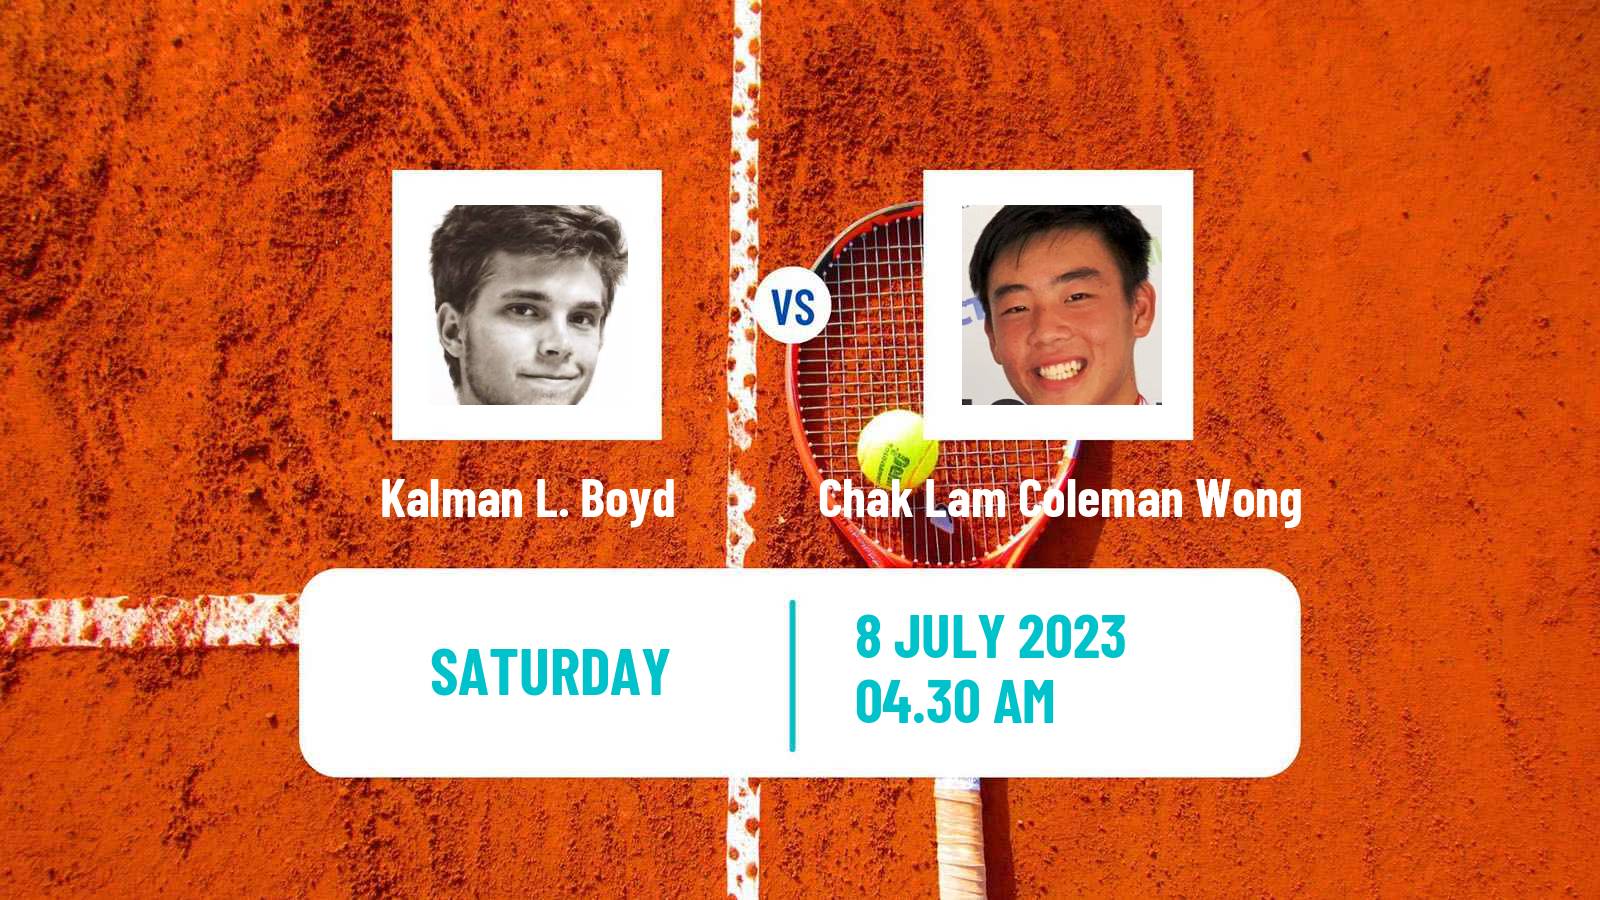 Tennis ITF M15 Monastir 27 Men Kalman L. Boyd - Chak Lam Coleman Wong